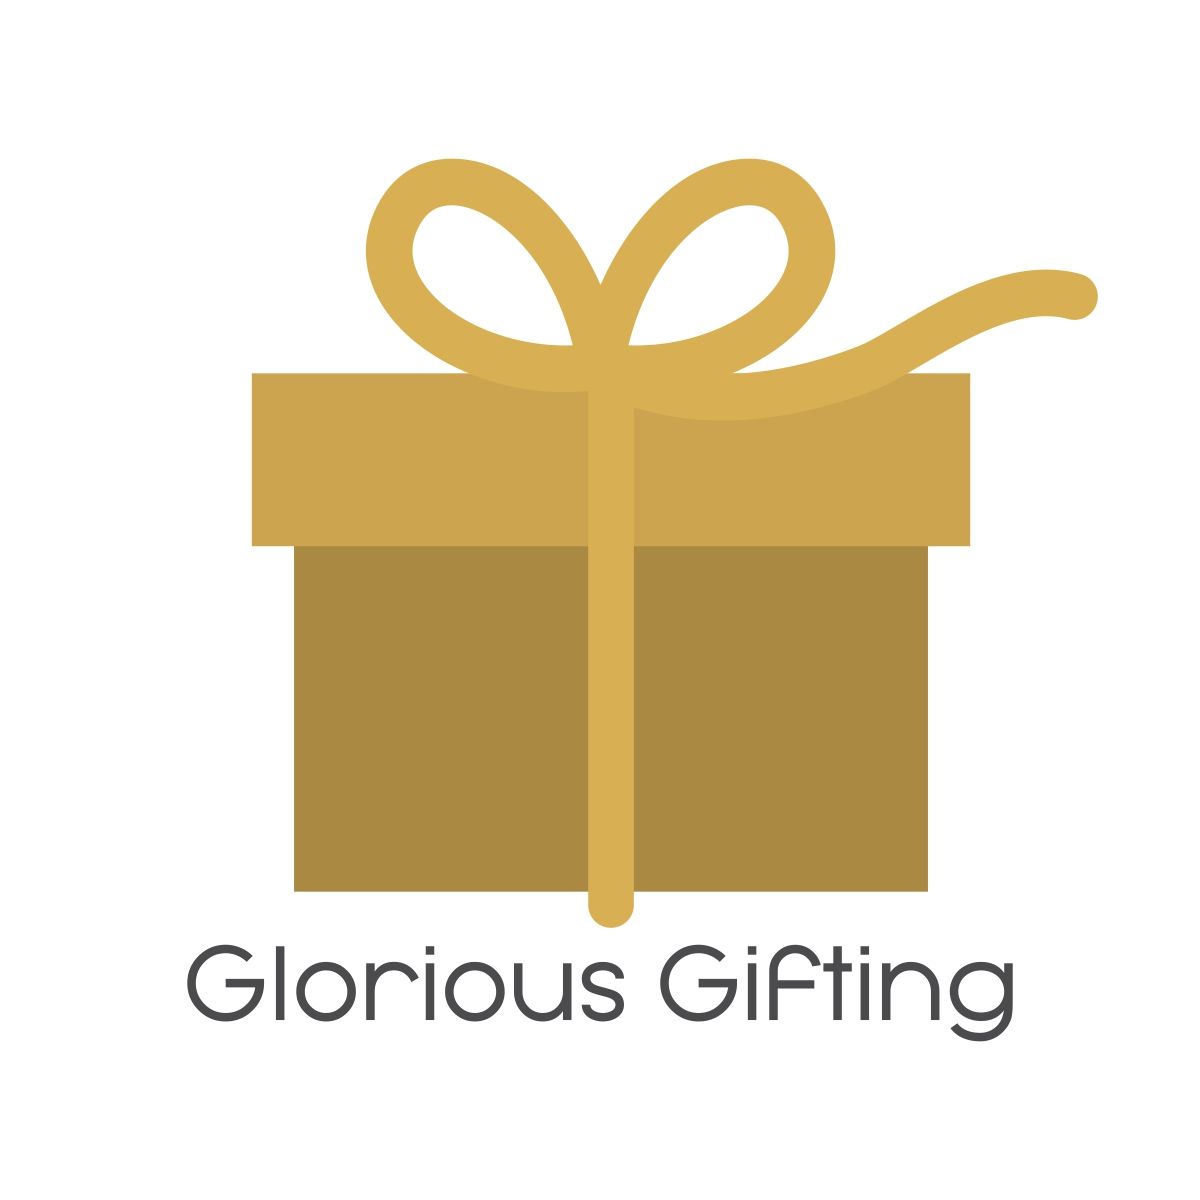 Glorious Gifting logo